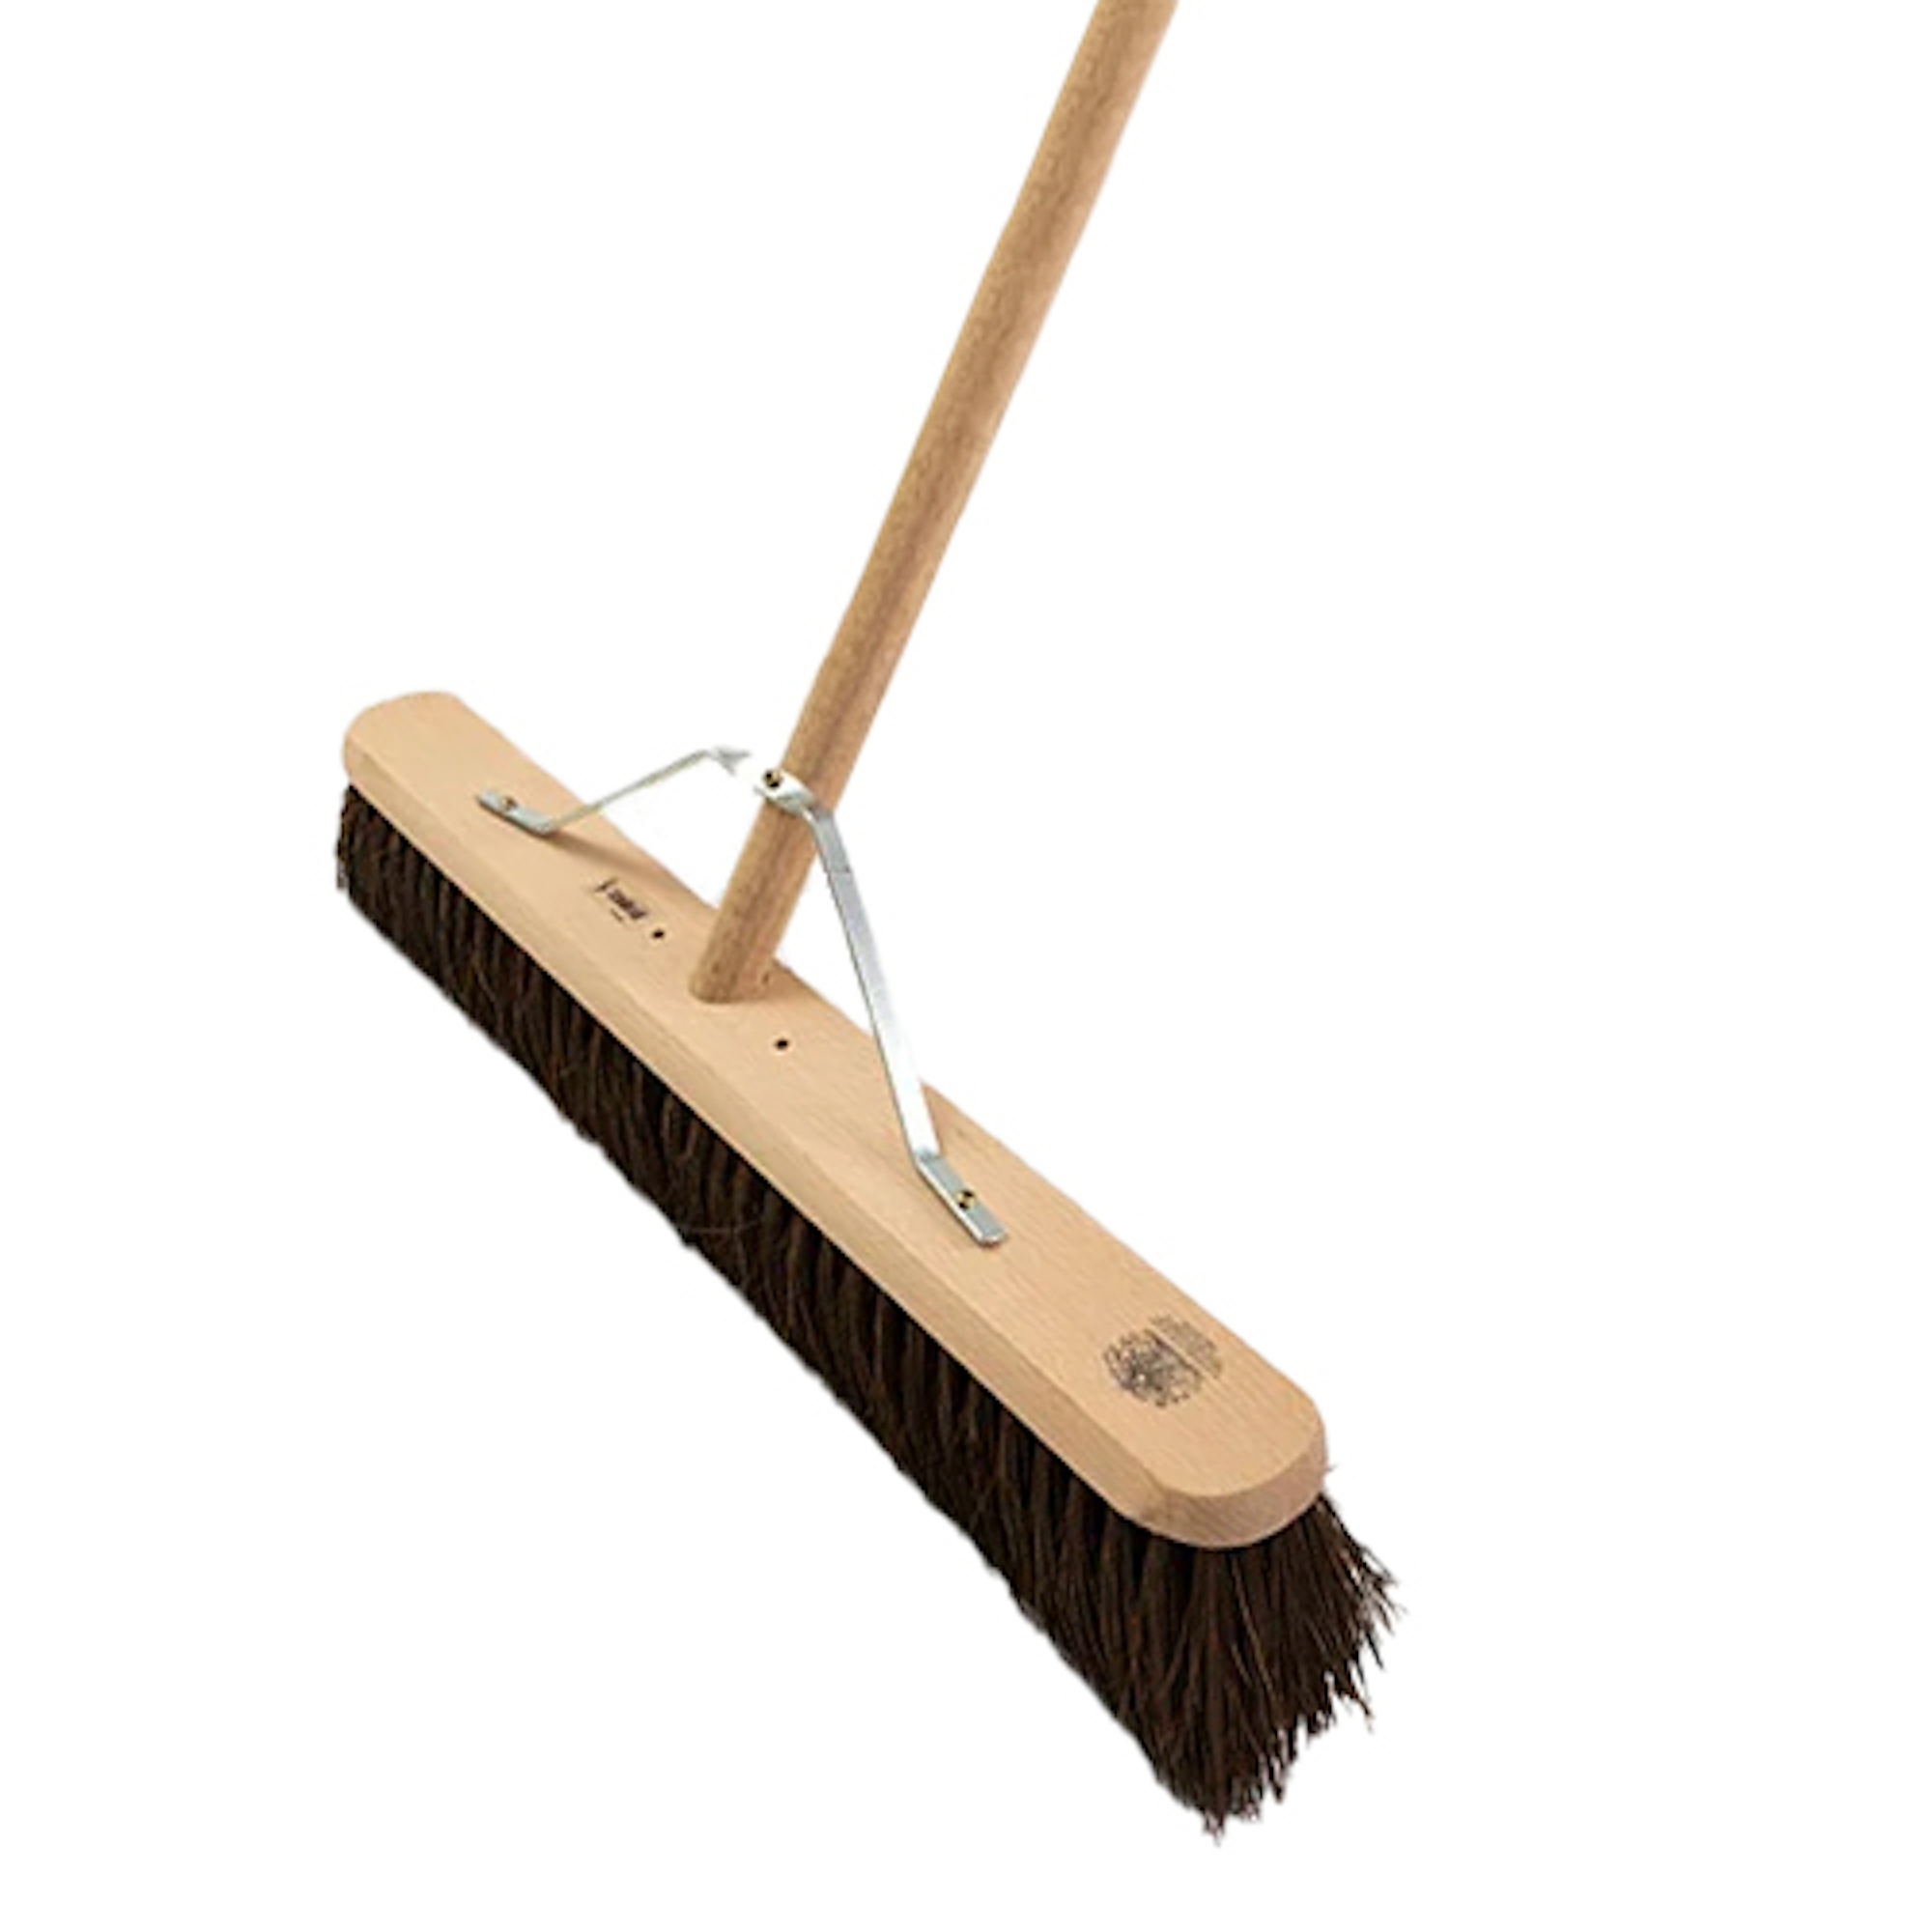 V-Sweeper Coconut broom - Gottardo Brushes and brooms